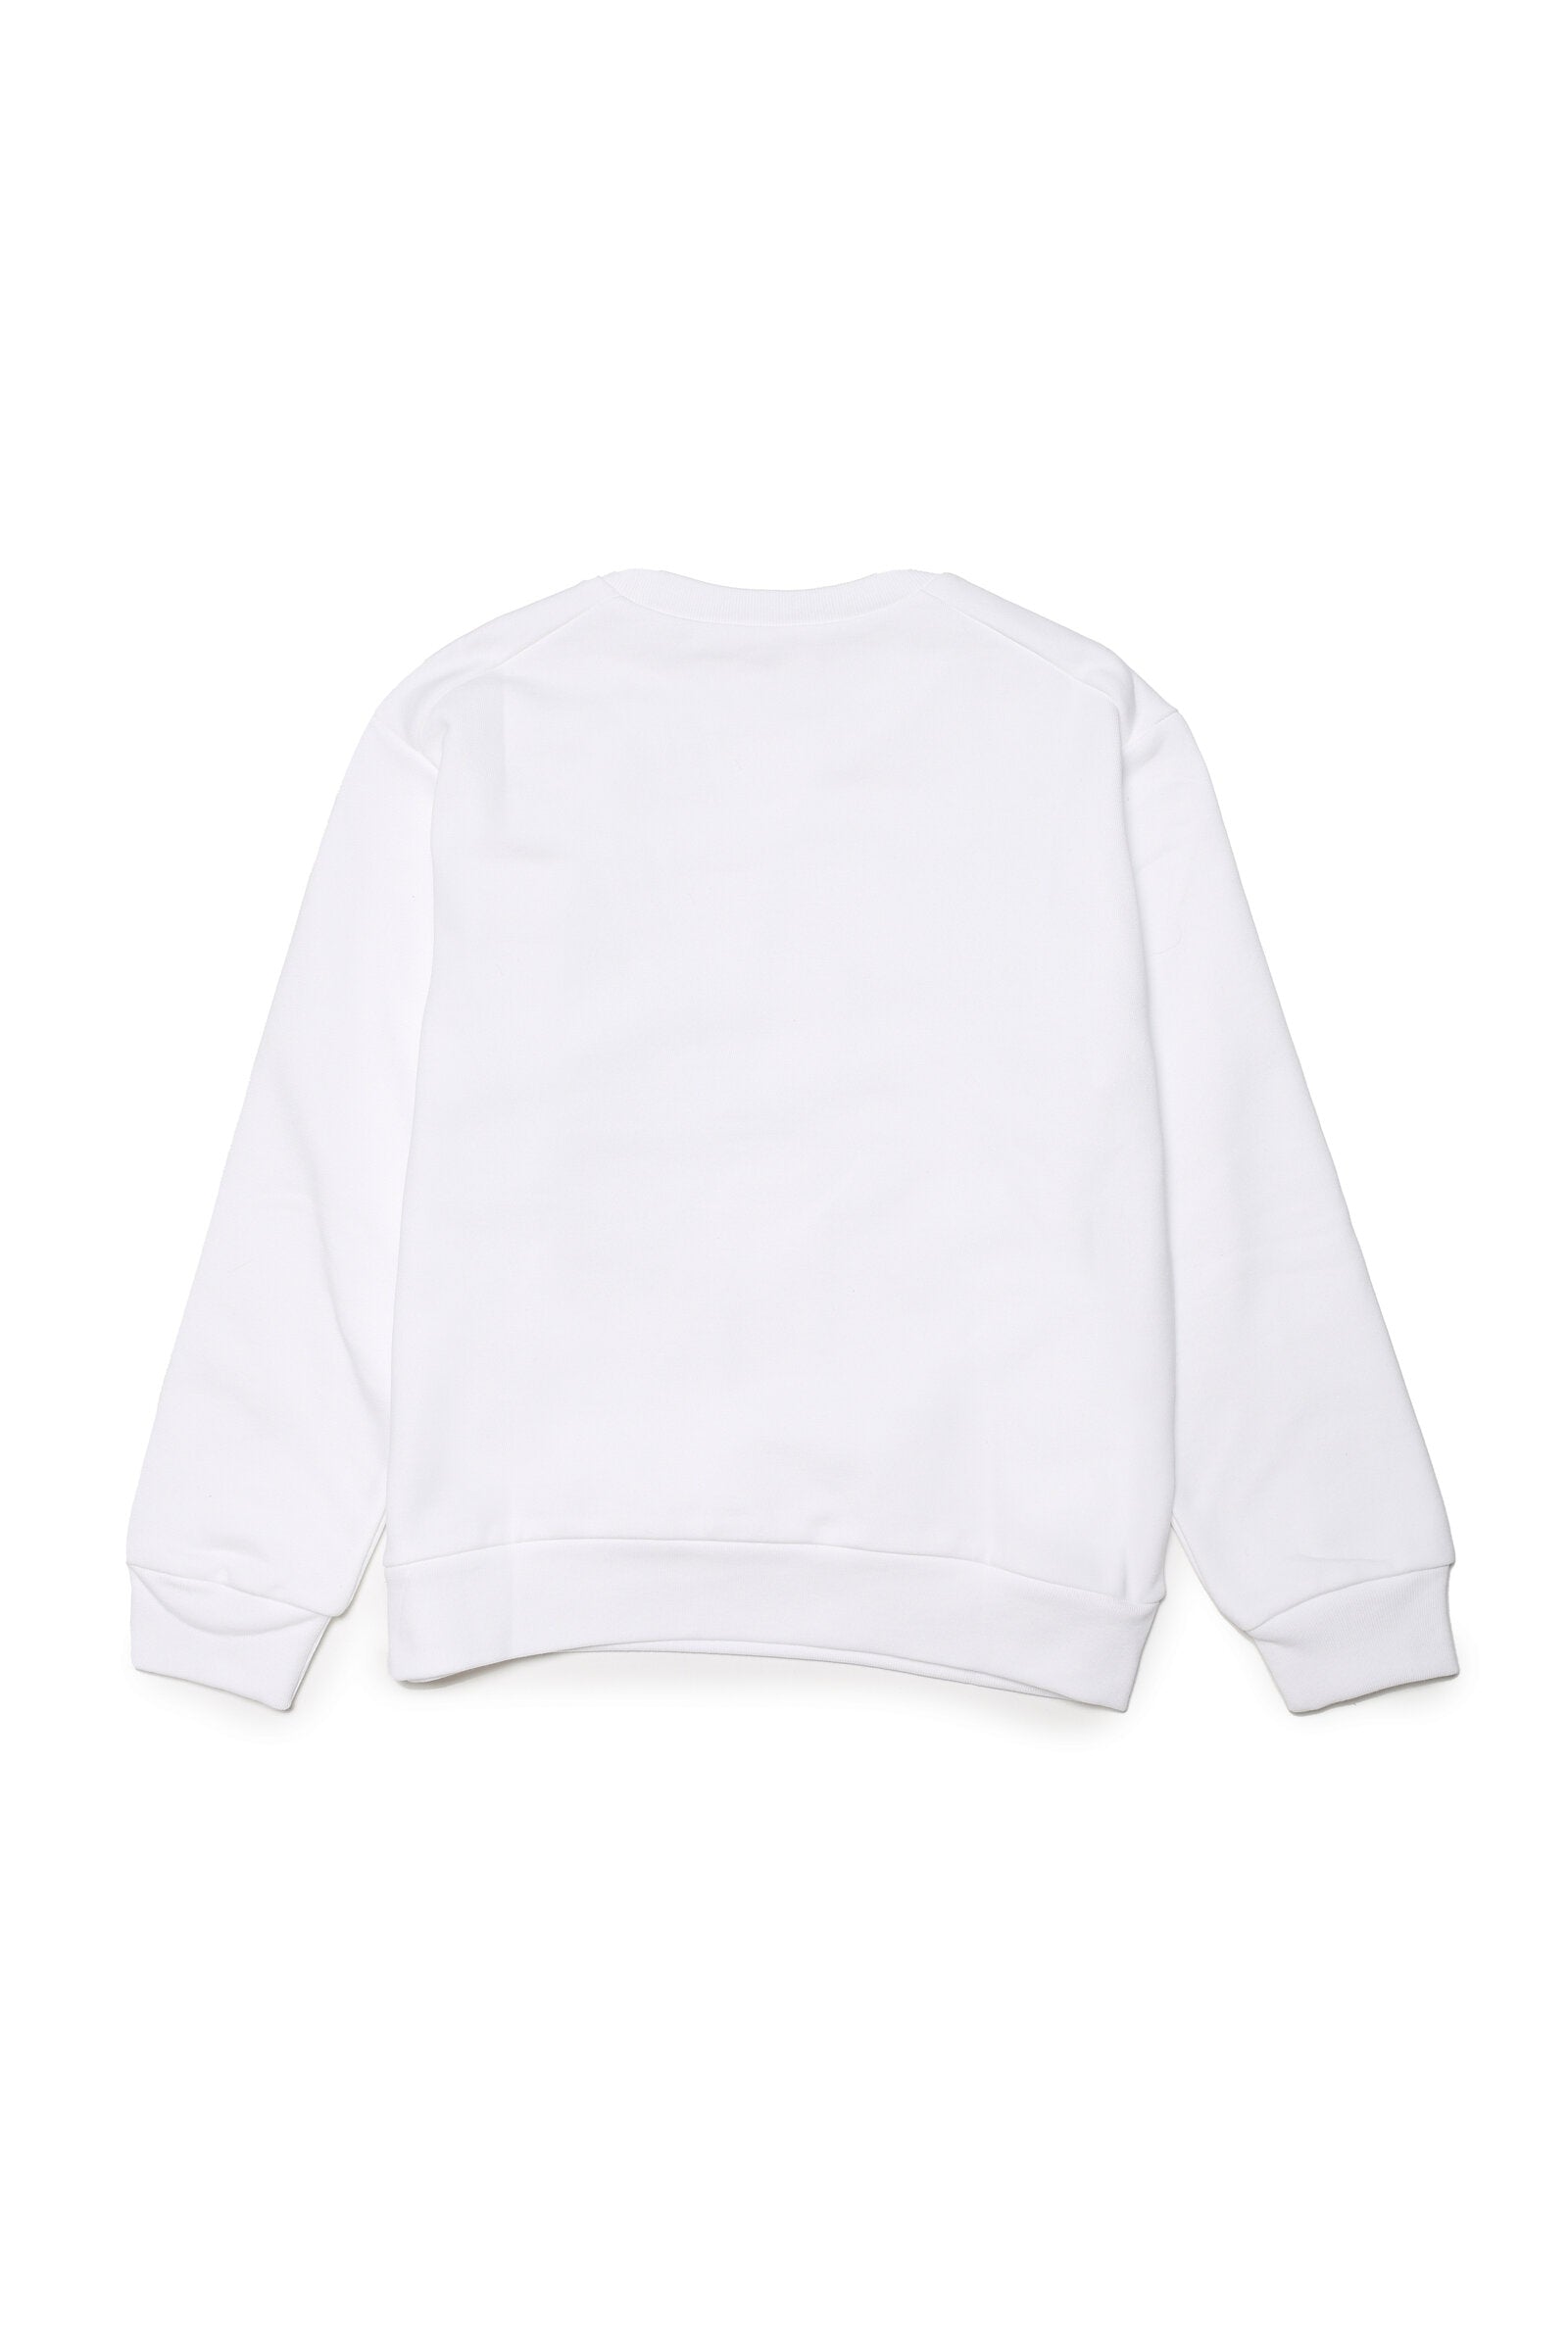 White cotton crew-neck sweatshirt with displaced Marni logo